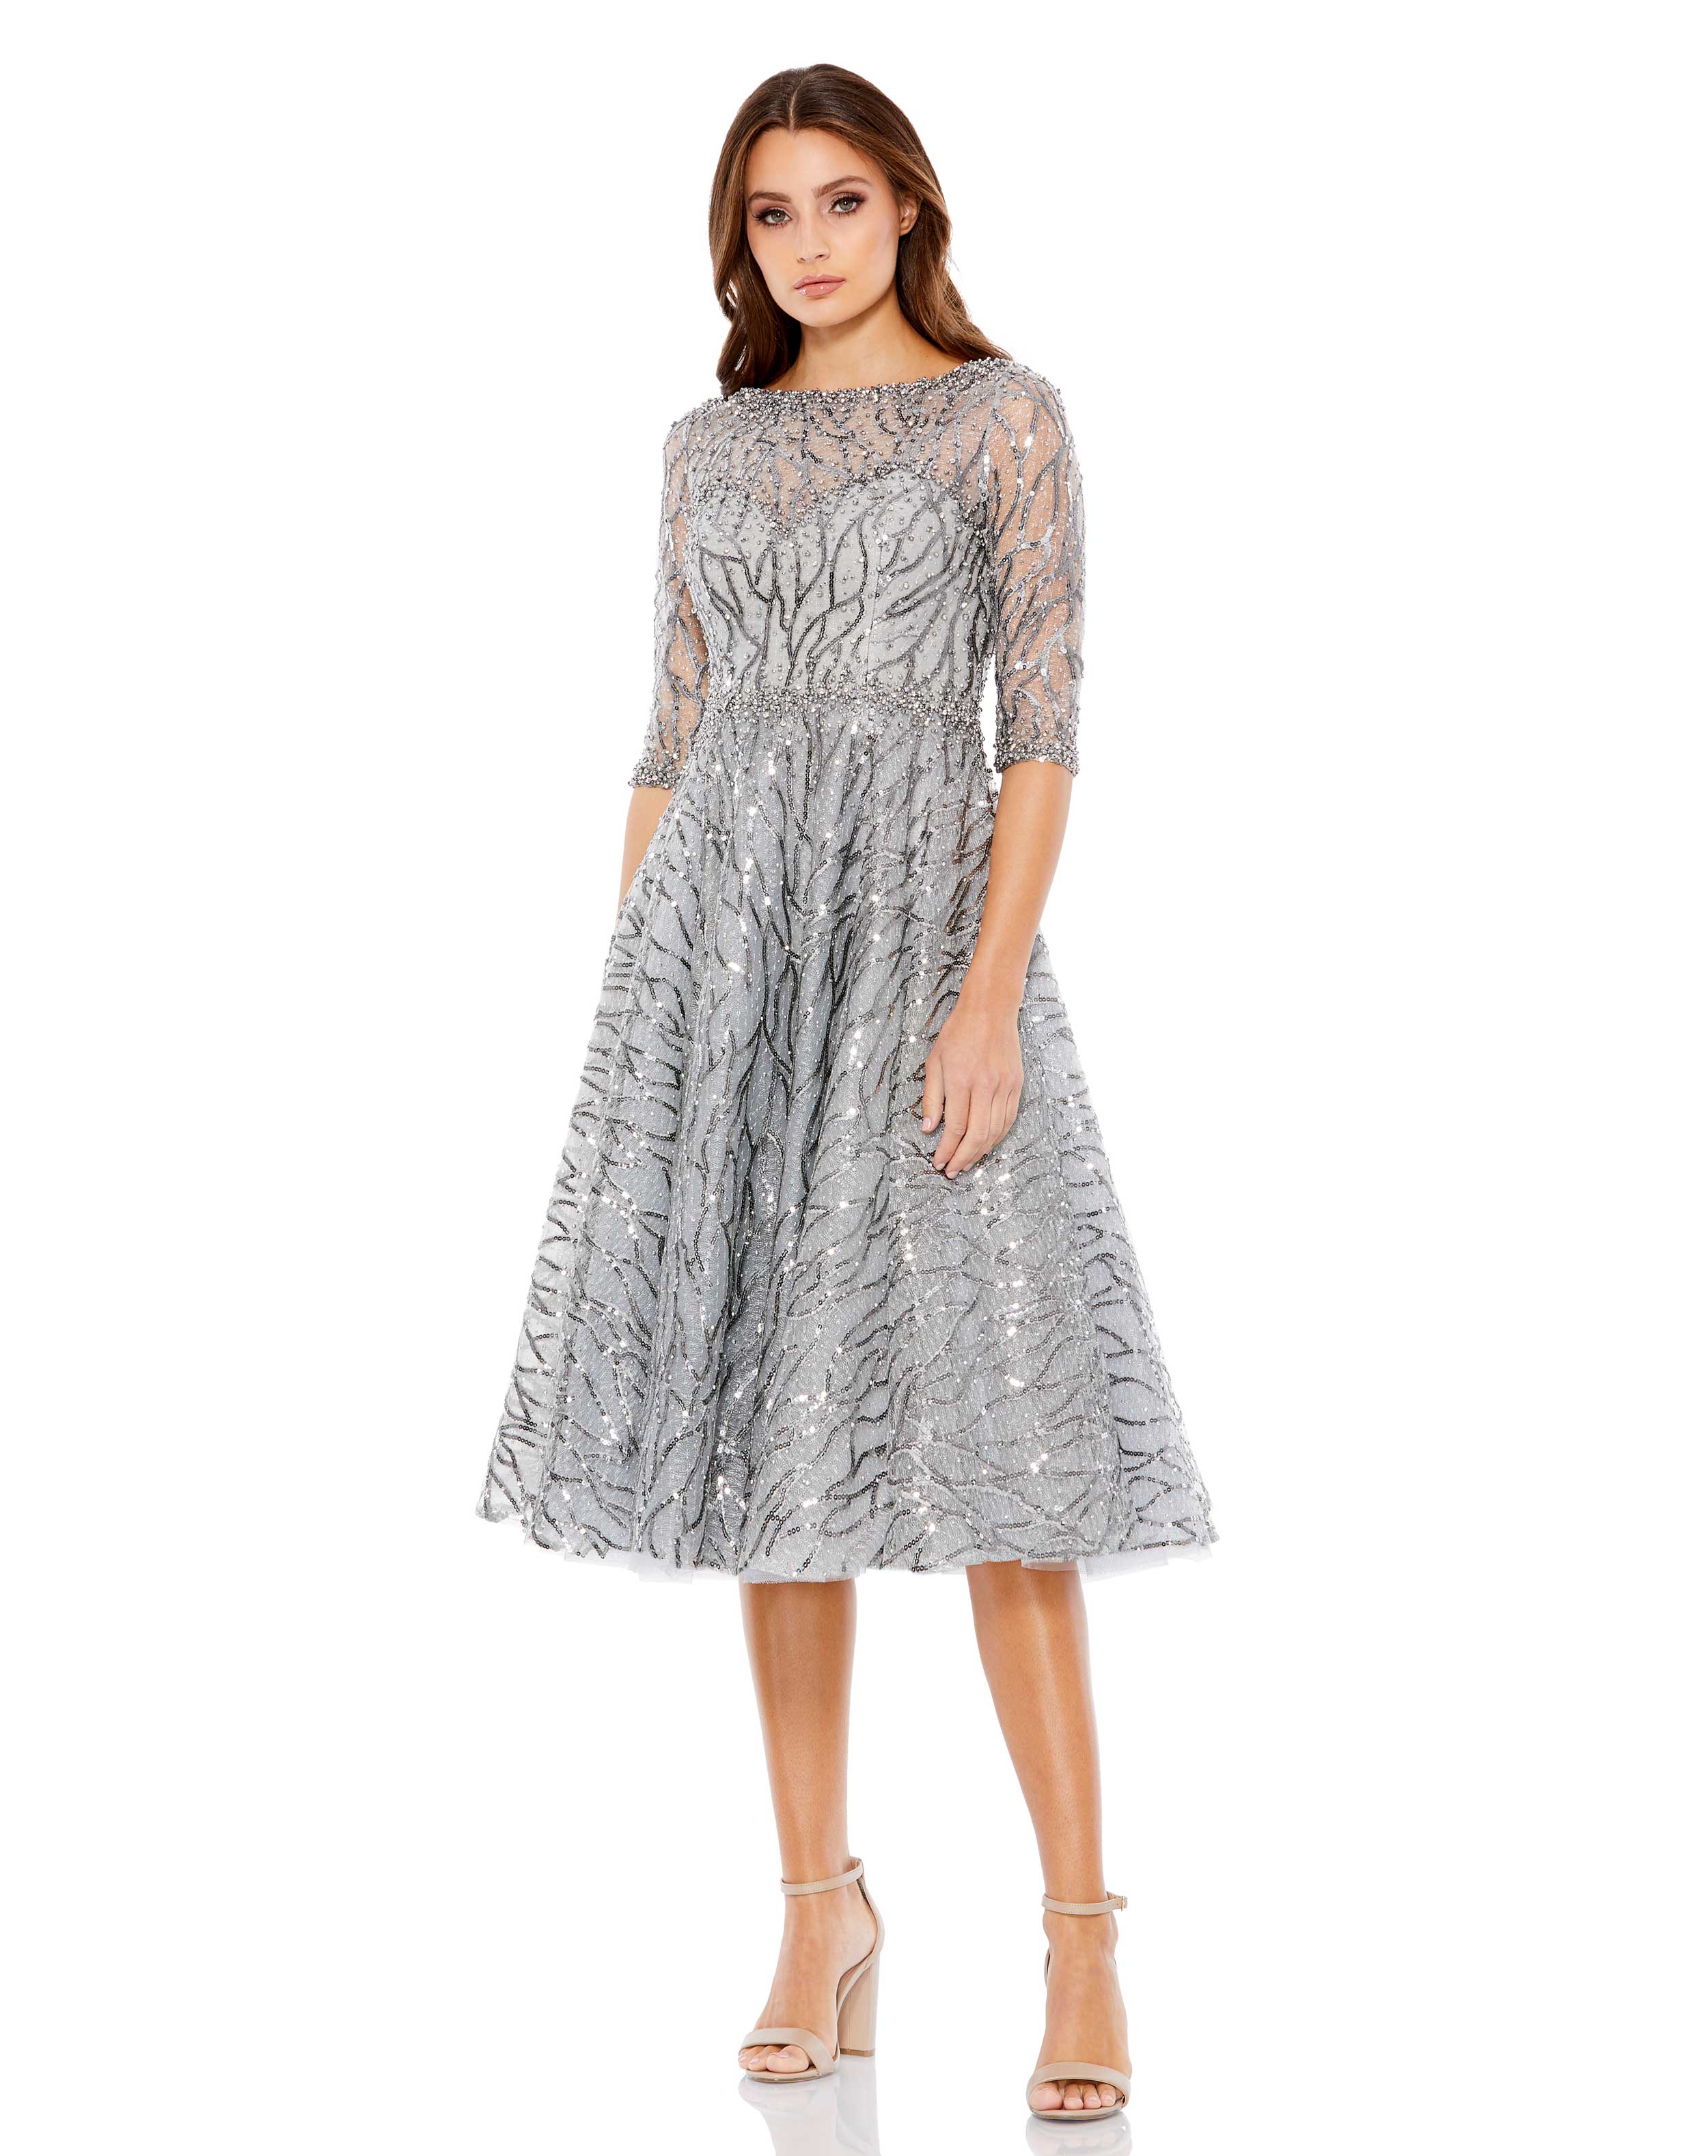 High Neck Above Elbow Sleeve Embellished A Line Dress – Mac Duggal